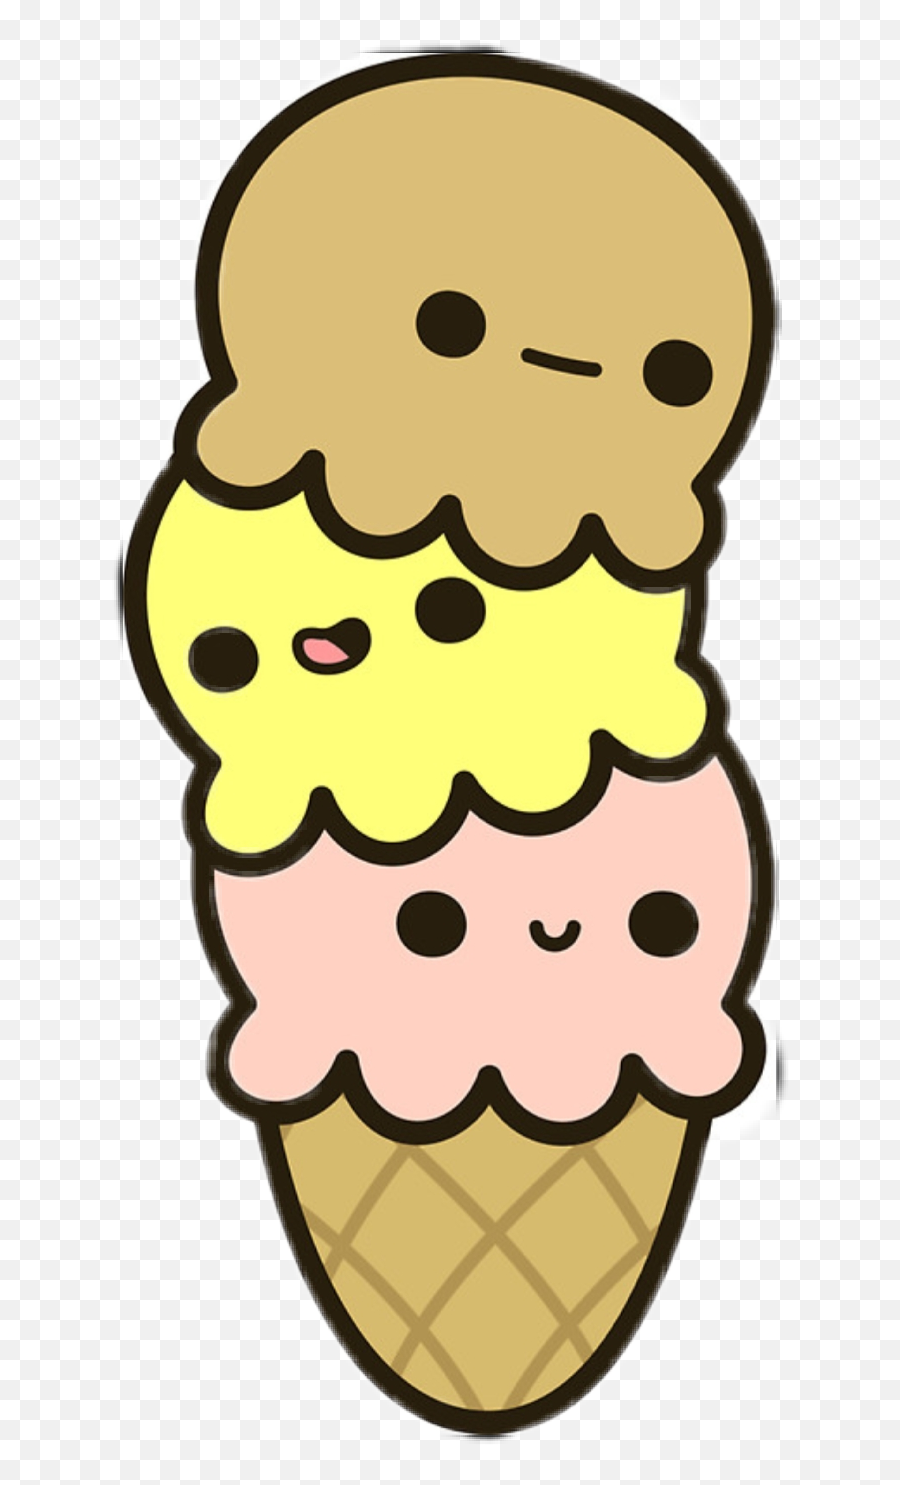 Icecream Falling Teamwork Freetoedit - Ice Cream With Faces Emoji,Teamwork Emoji